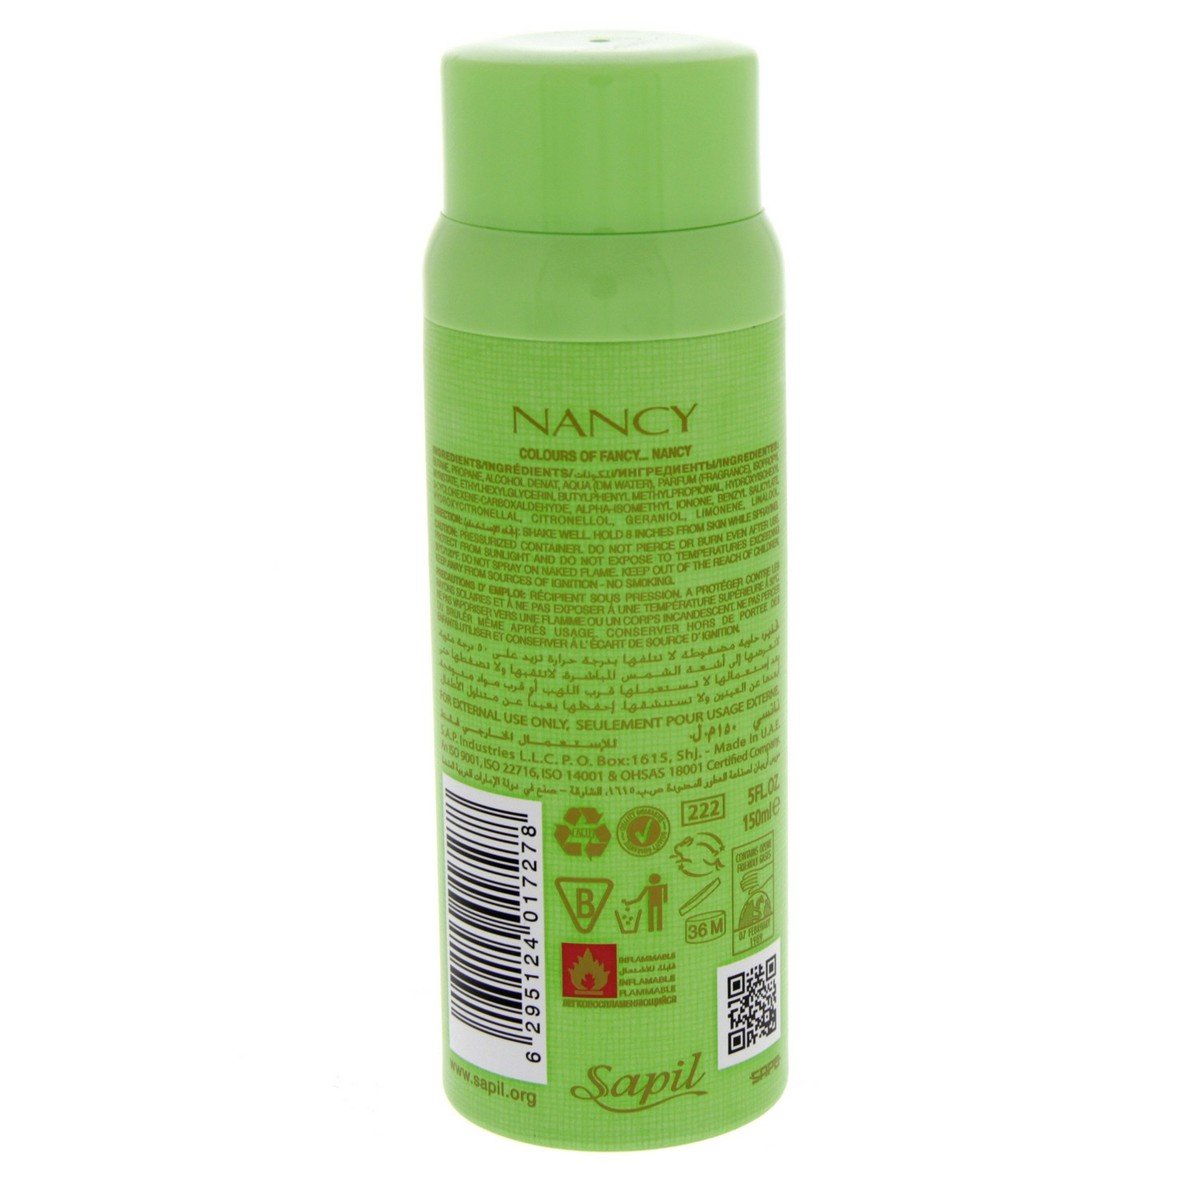 Sapil Nancy Perfumed Deodorant Women 150 ml